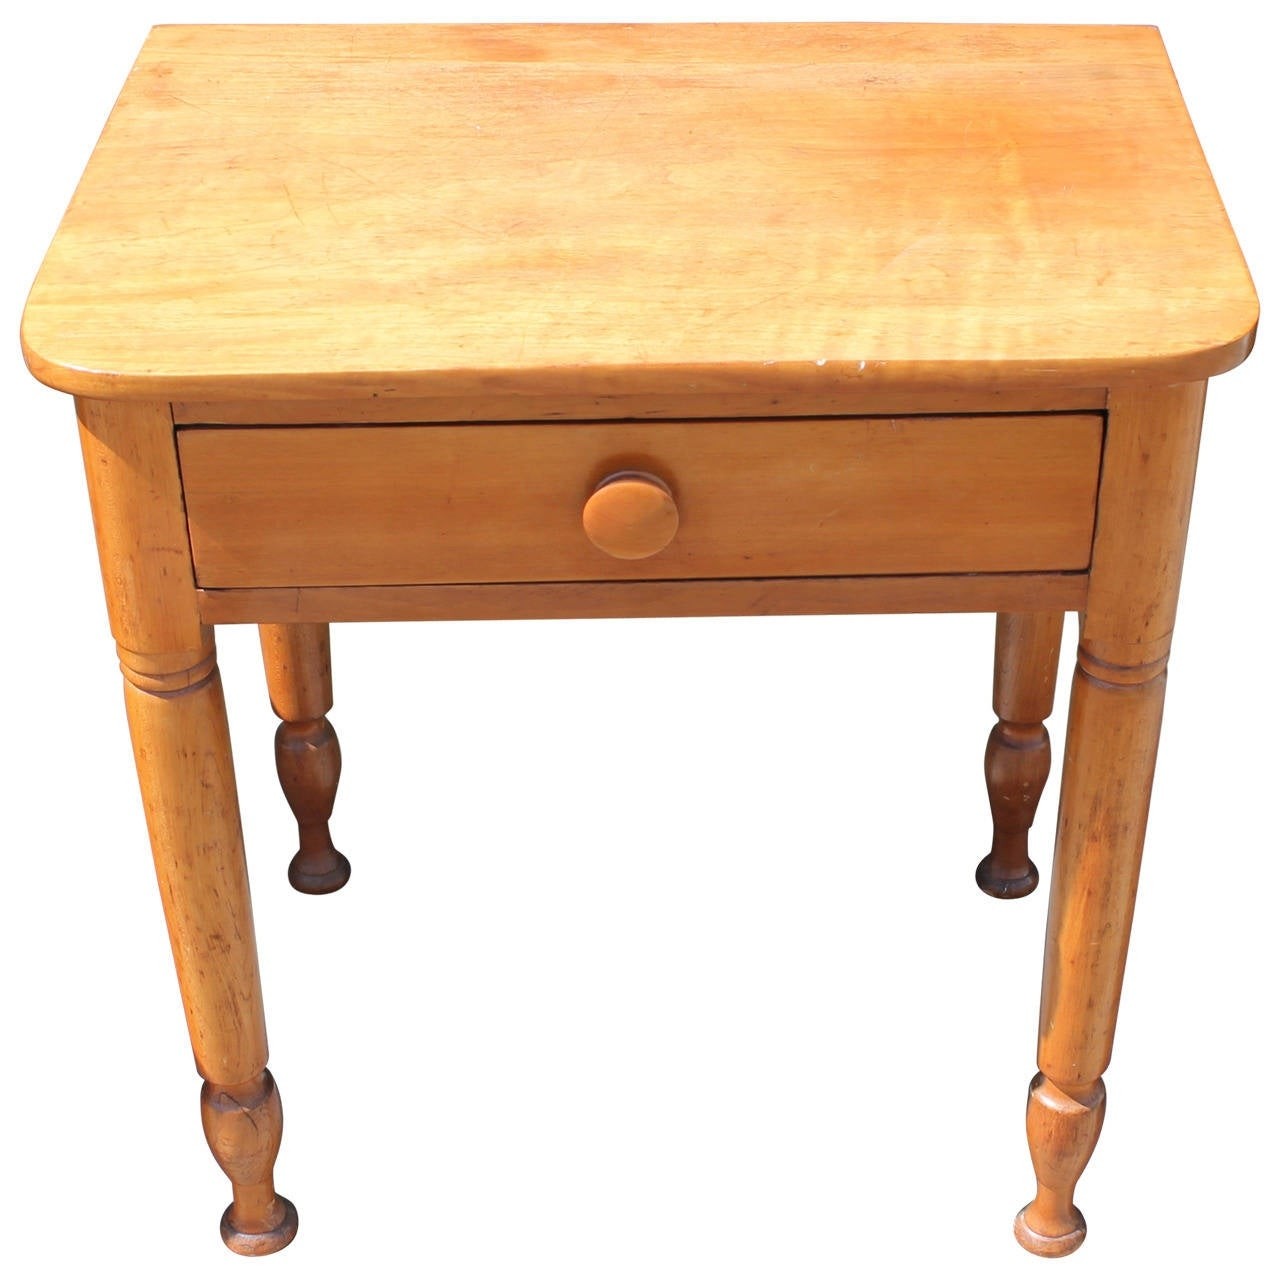 19th century early maple end table from pennsylvania farm 1